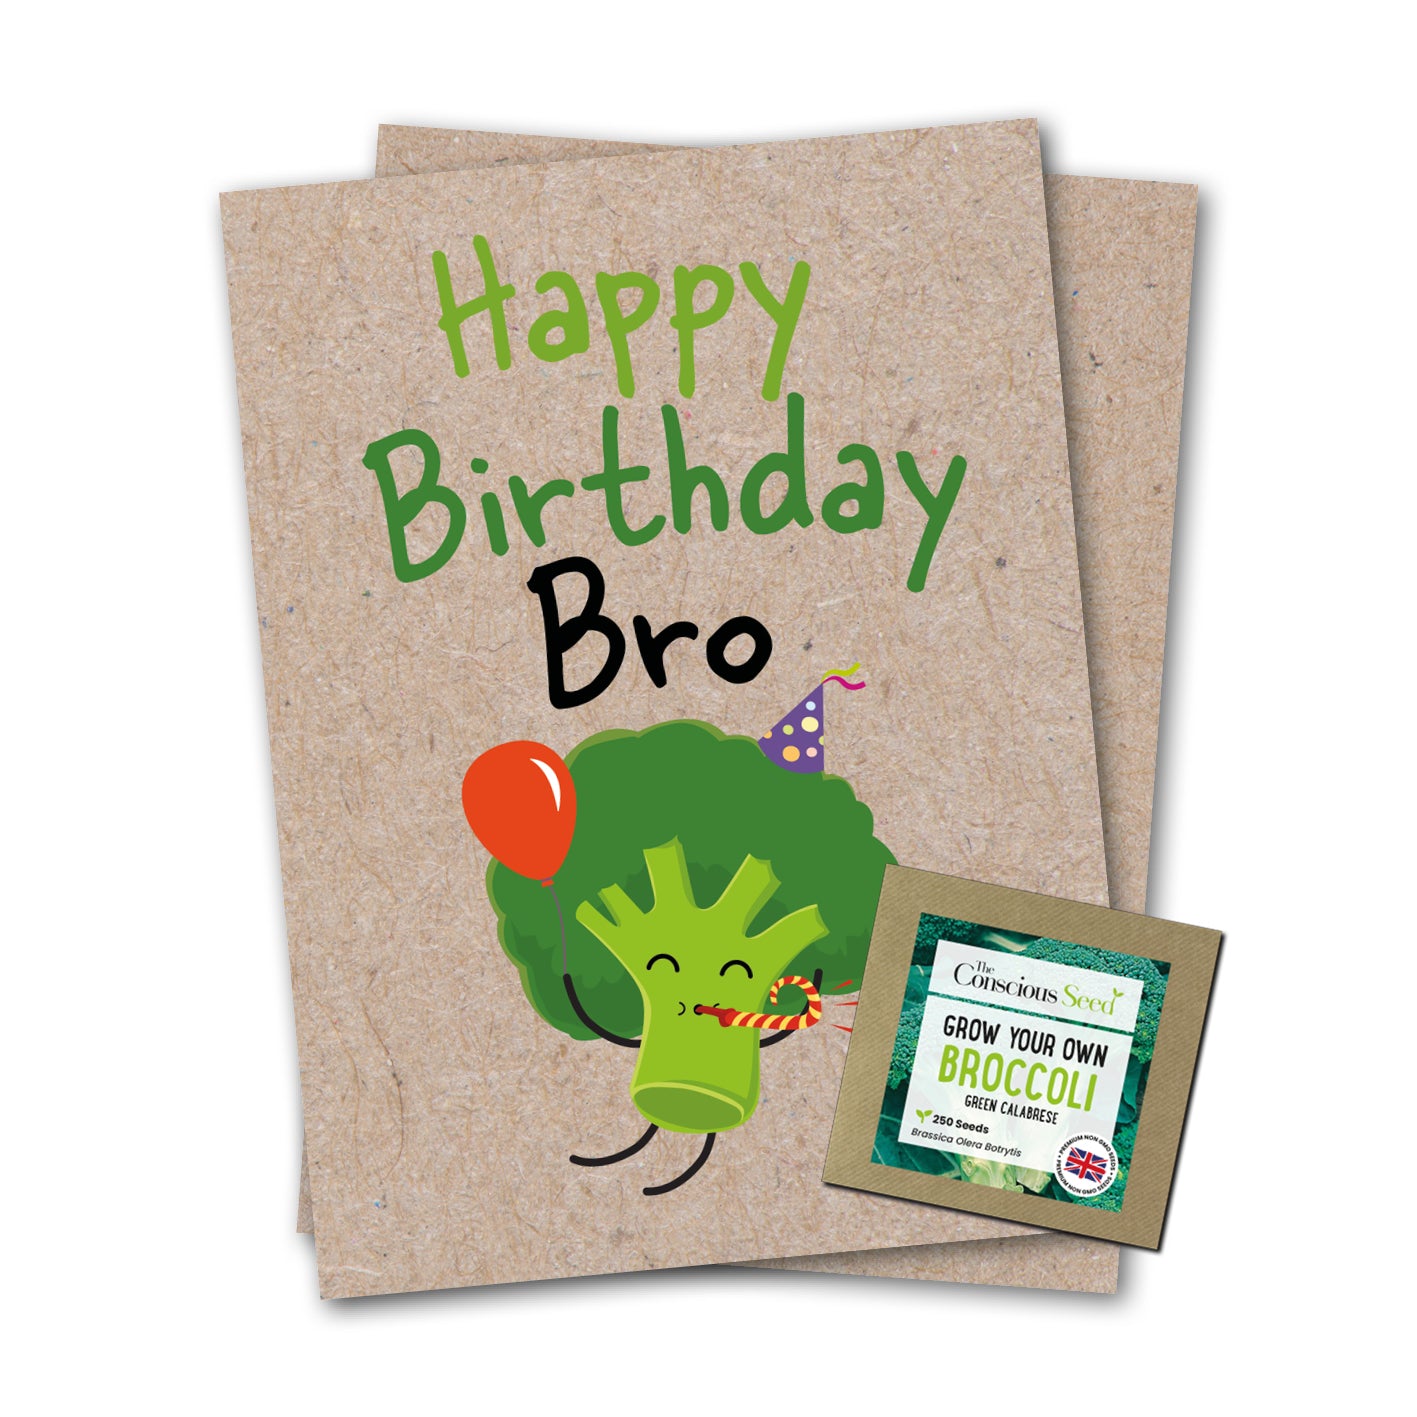 Happy Birthday Bro - Eco Kraft Greeting Card